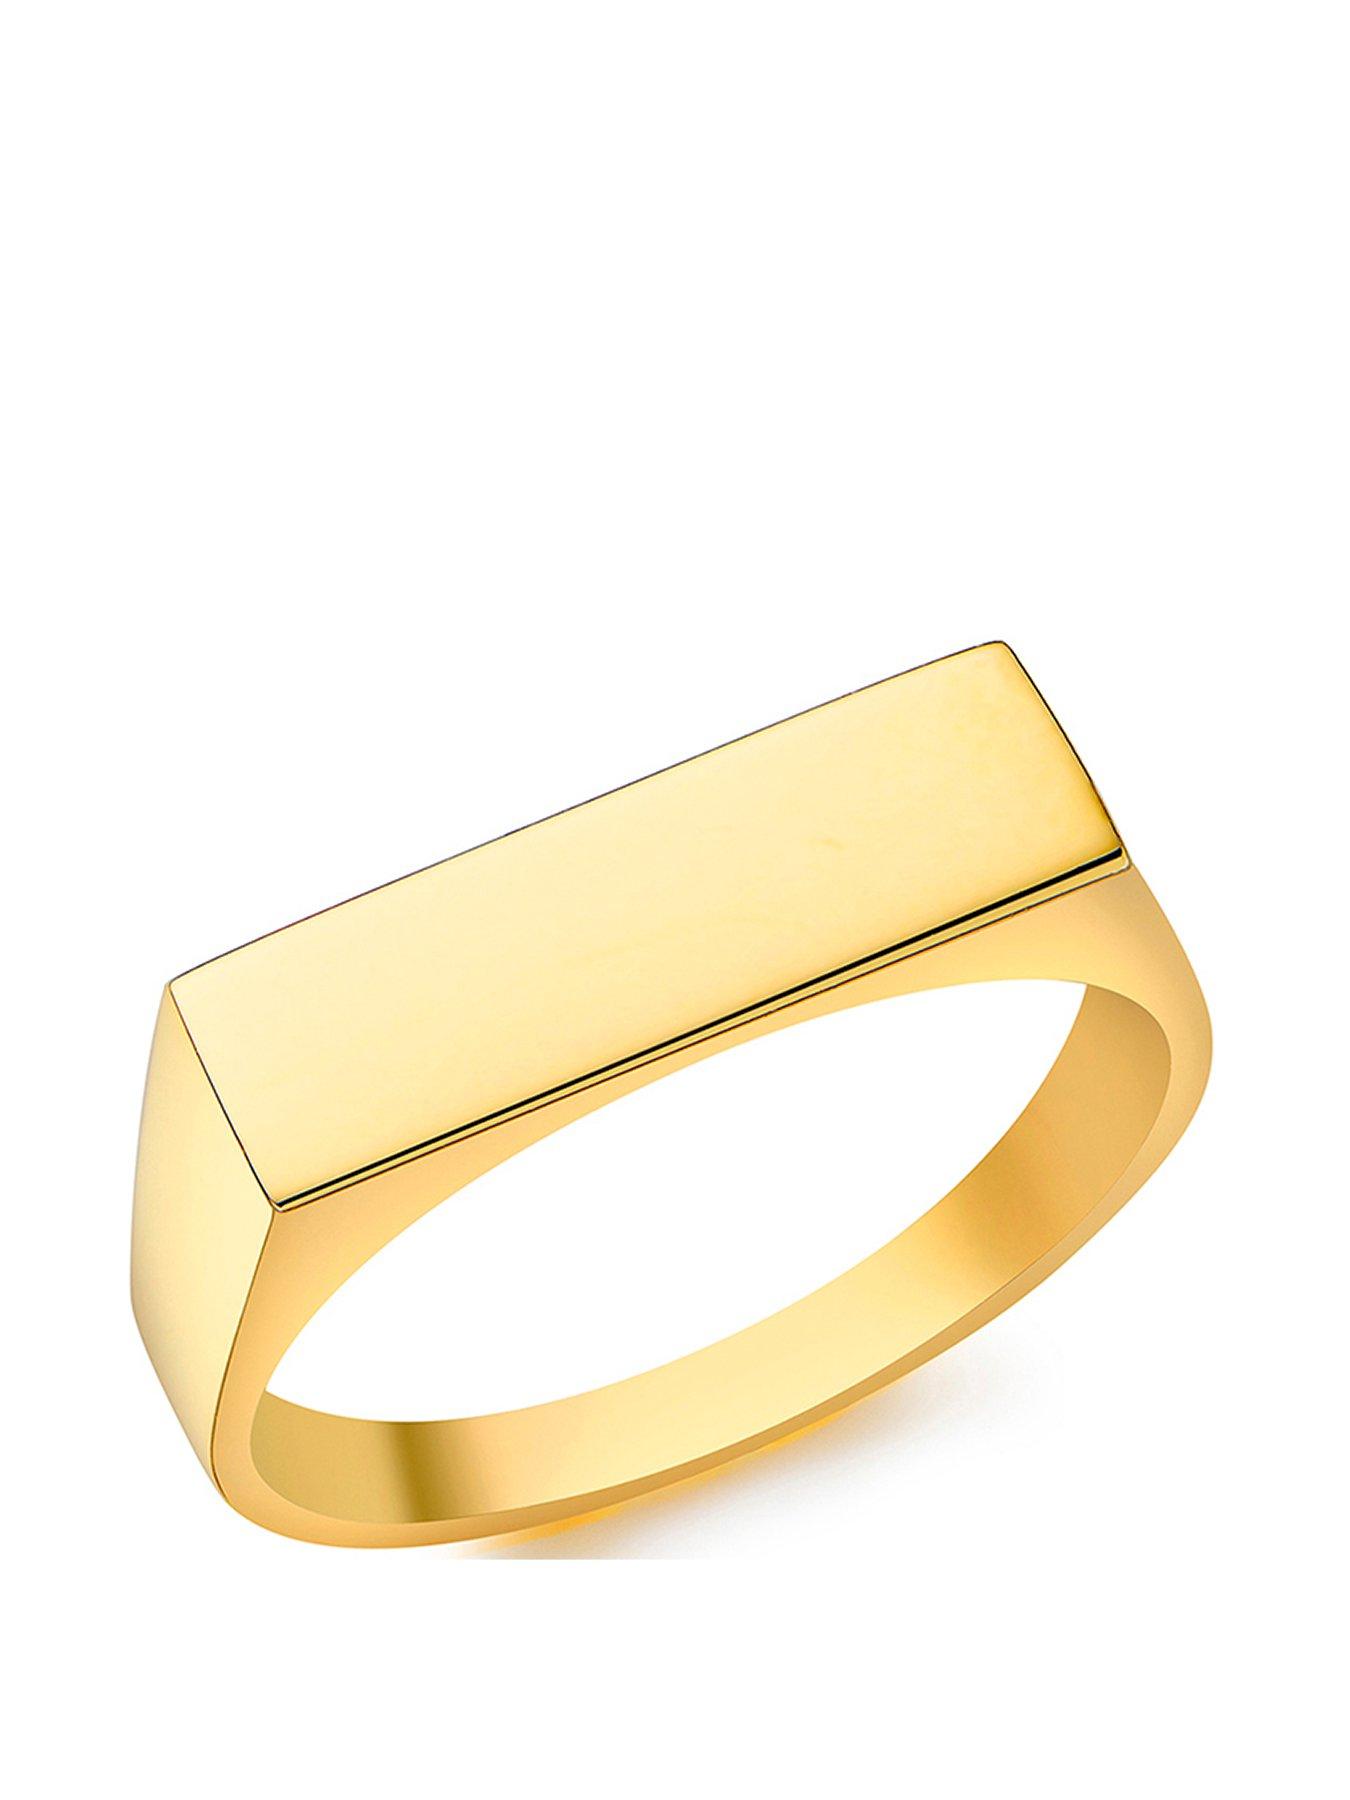 Garnet Womens Ring Details about   Vintage "Memento" 14K YELLOW GOLD 4.1 Grams Size 6 